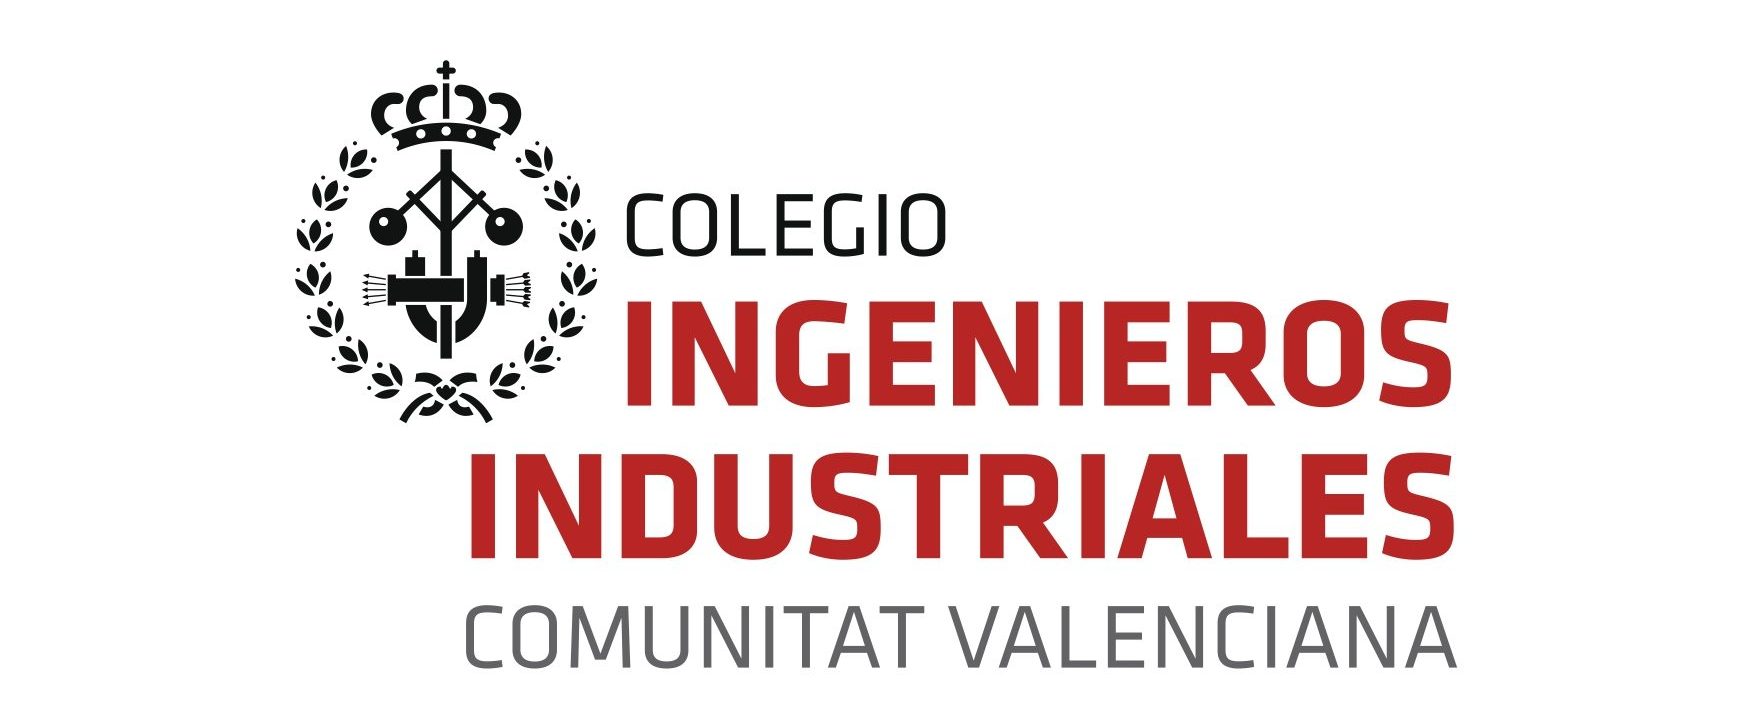 Colegio Ingenieros Industriales Comunitat Valenciana